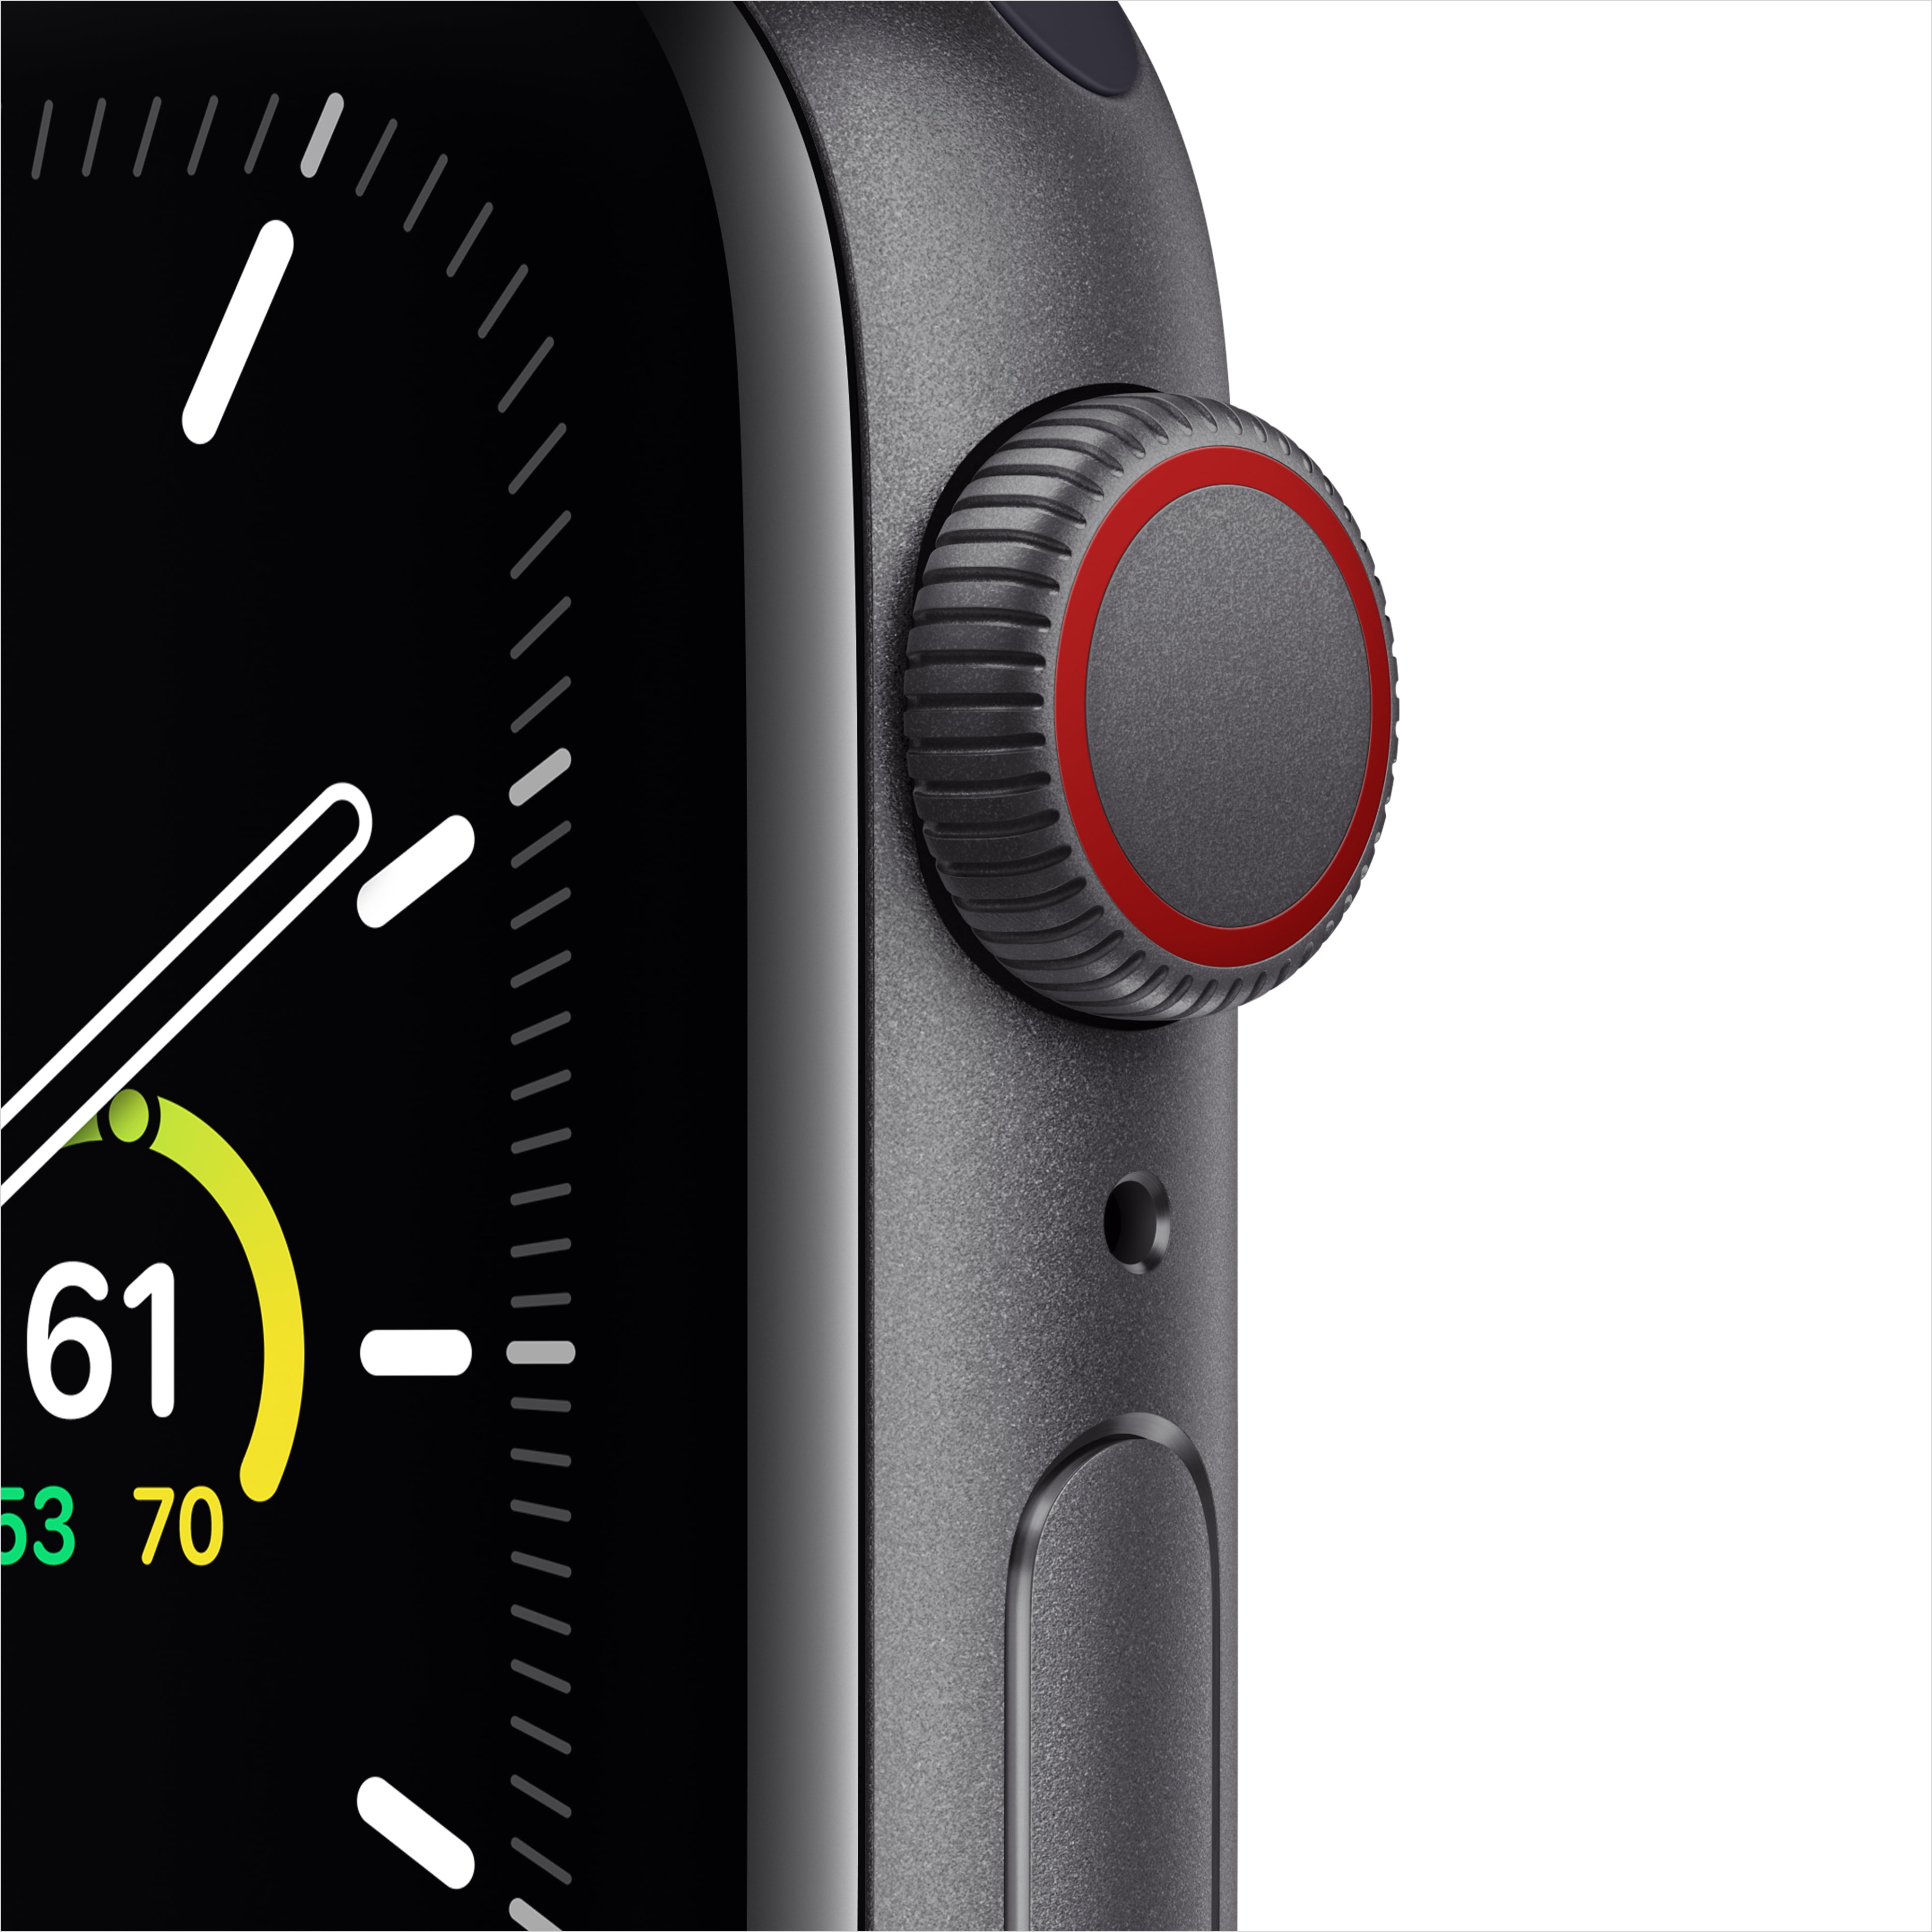 Apple Watch SE 1st Gen GPS, mm Space Gray Aluminum Case with